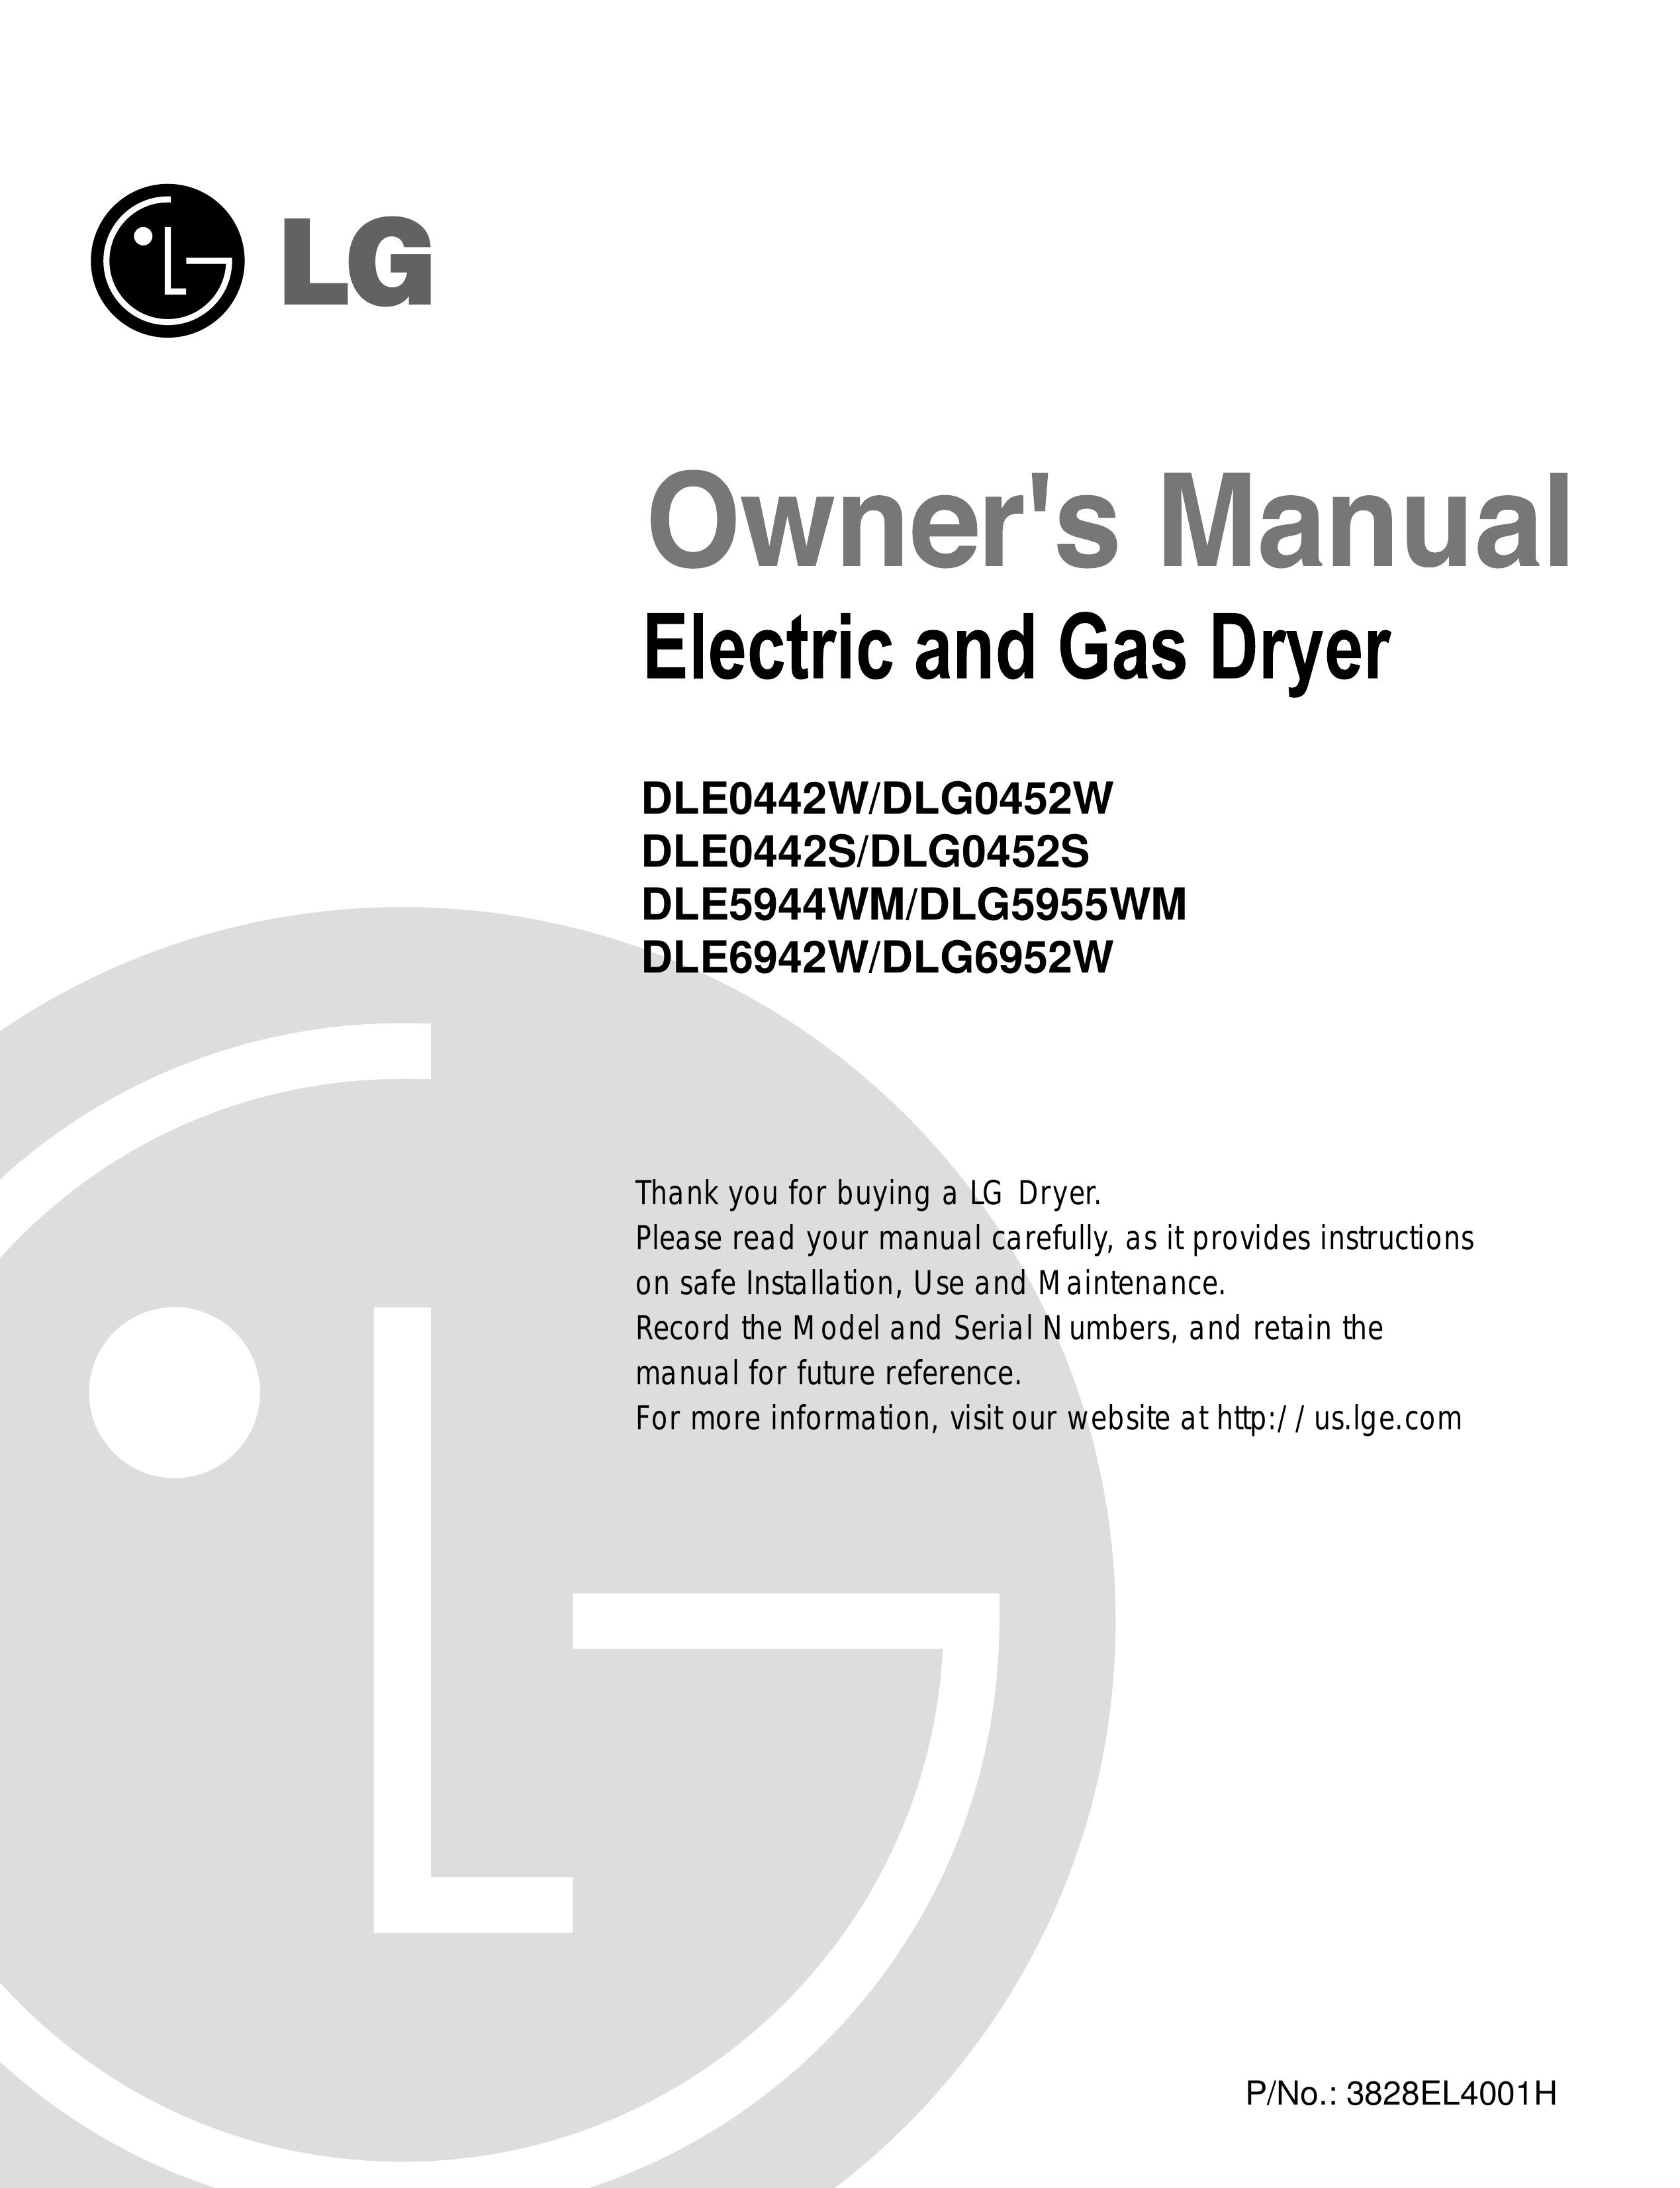 LG Electronics D6952W Clothes Dryer User Manual